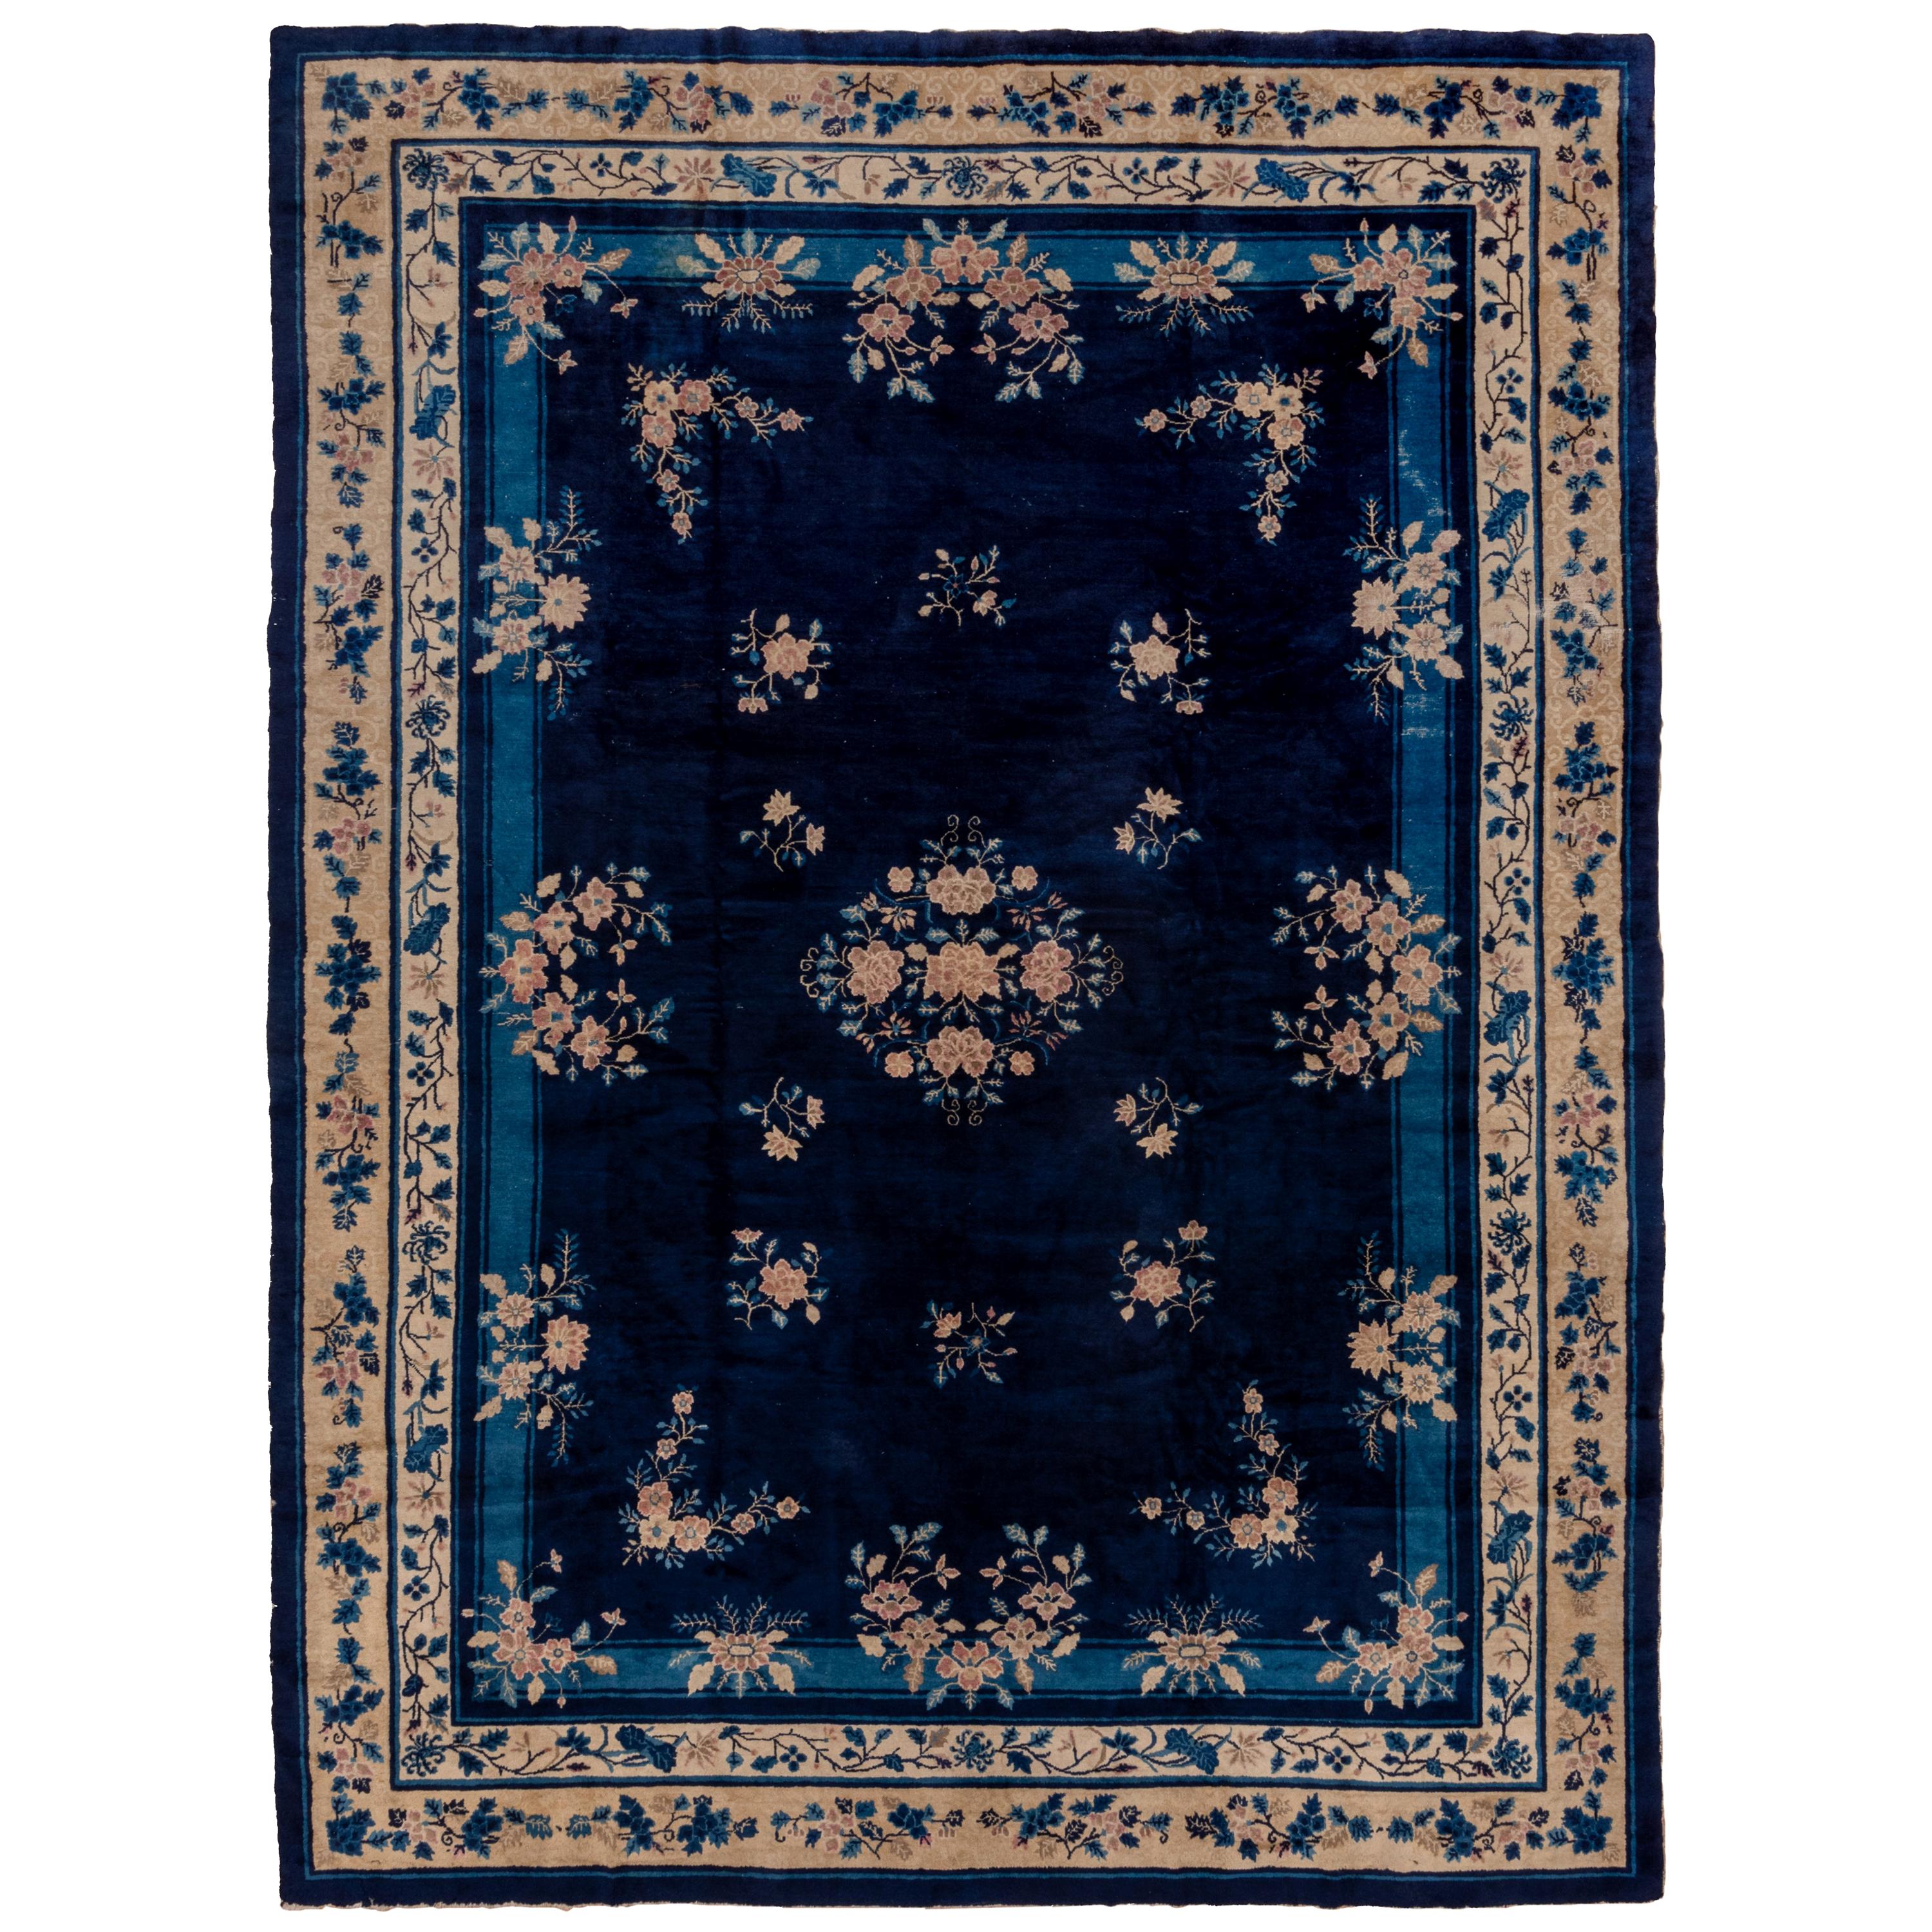 Antique Chinese Peking Carpet, Blue Field